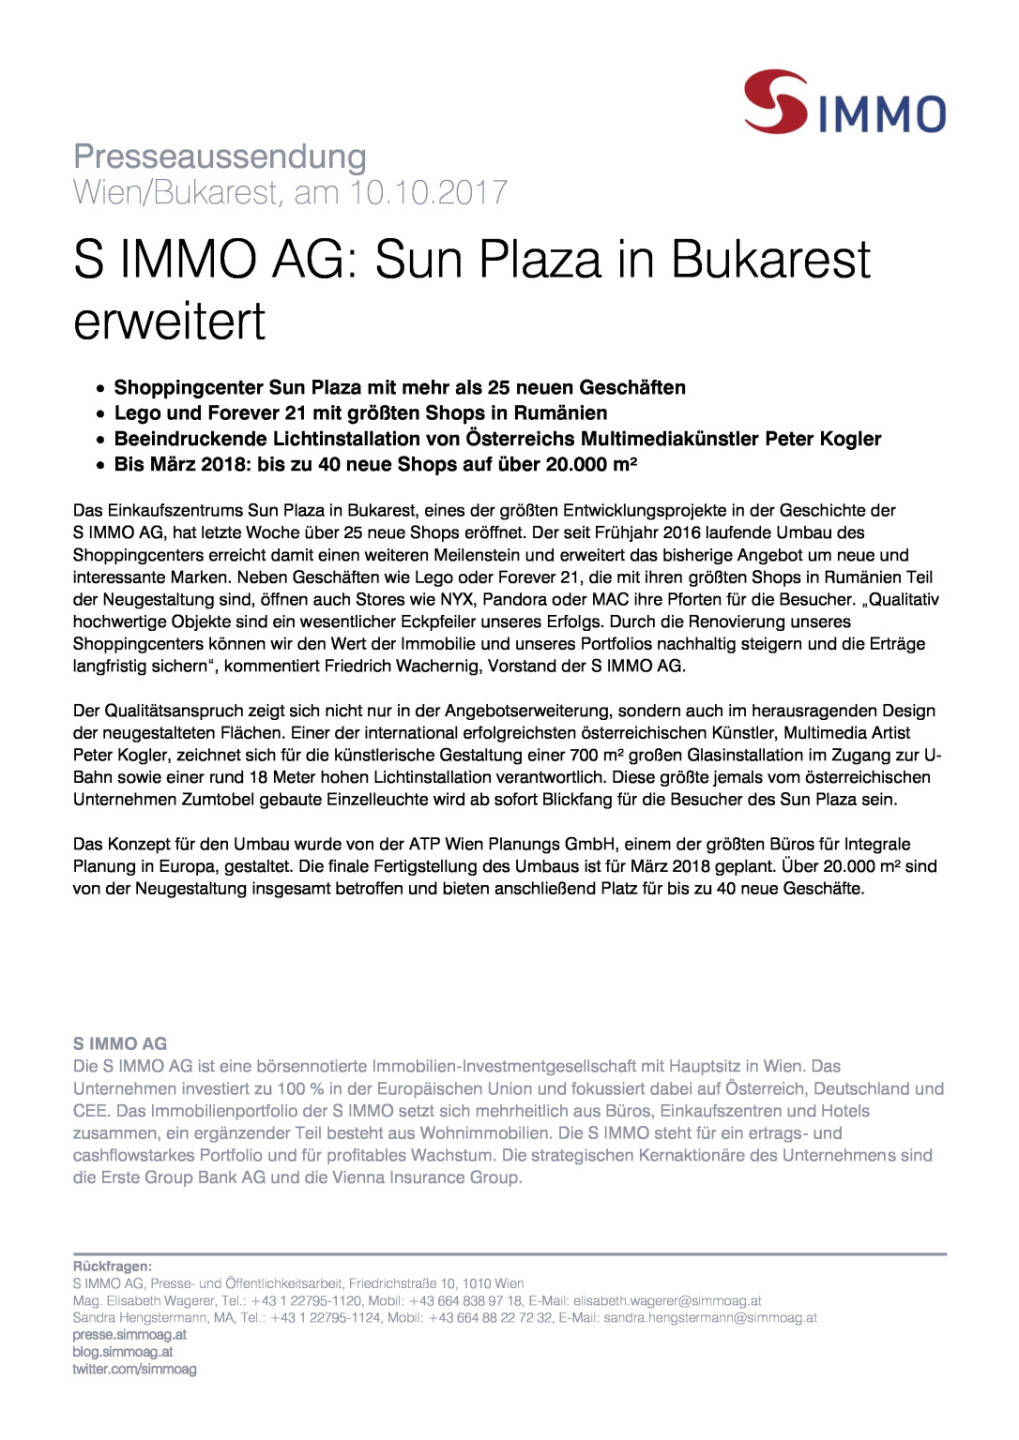 S Immo: Sun Plaza in Bukarest erweitert, Seite 1/1, komplettes Dokument unter http://boerse-social.com/static/uploads/file_2360_s_immo_sun_plaza_in_bukarest_erweitert.pdf